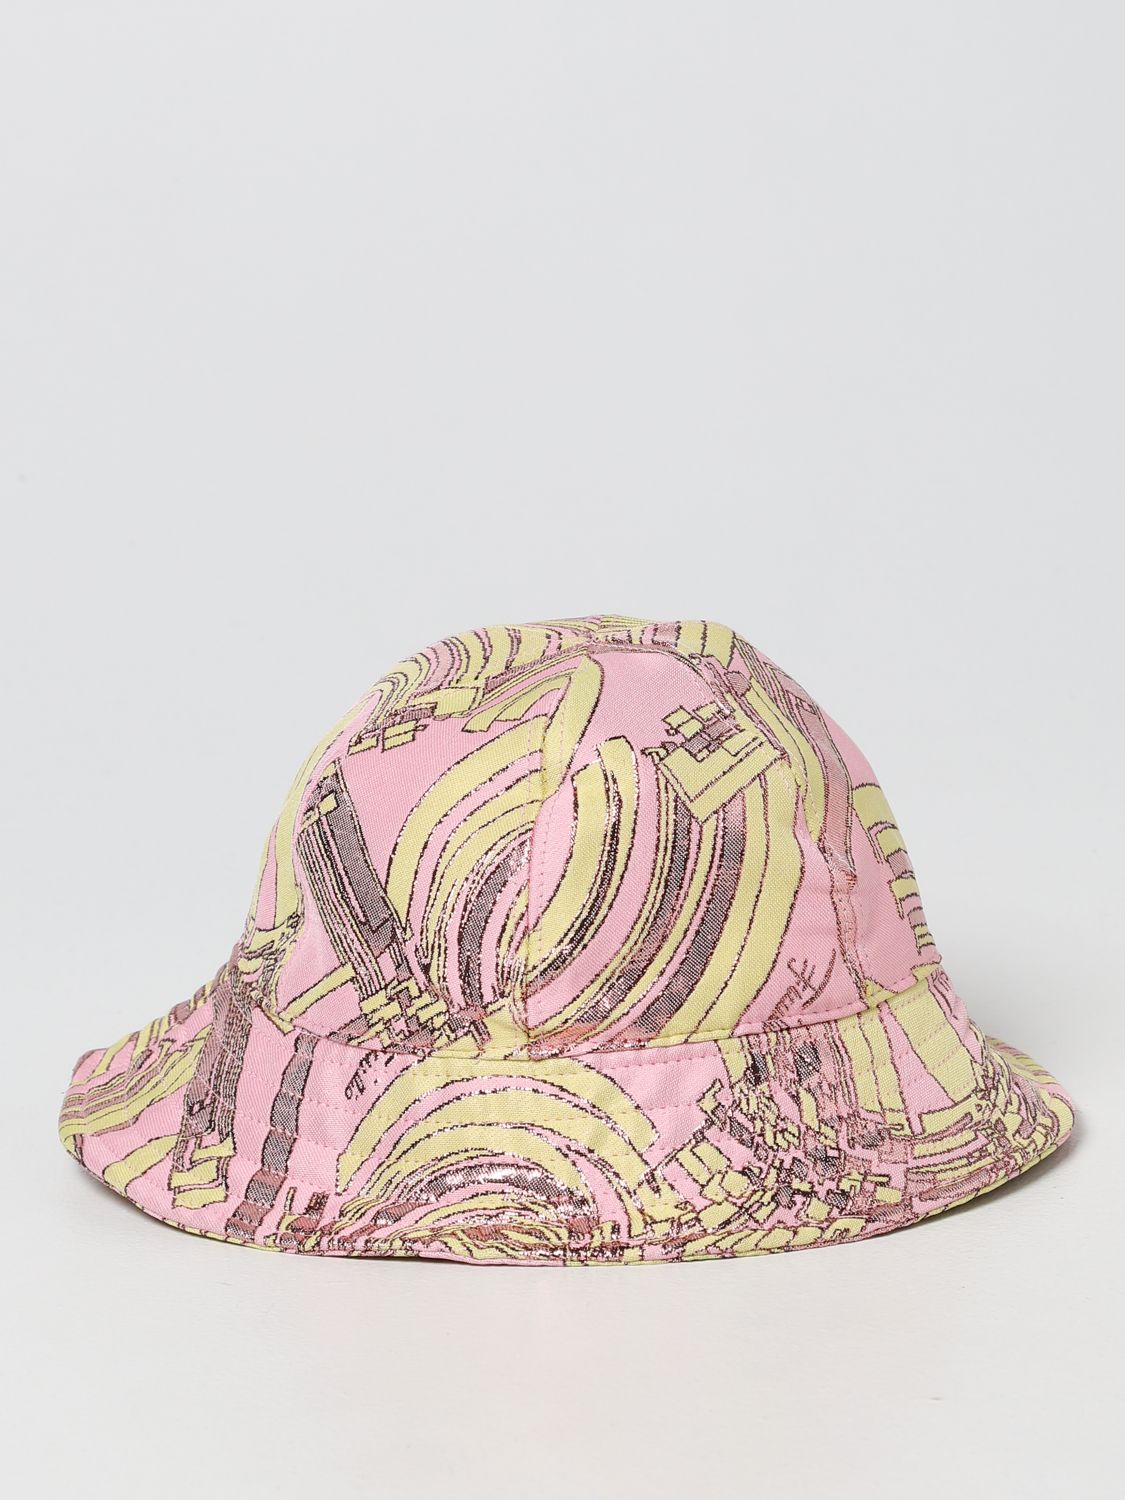 Emilio Pucci Emilio Pucci bucket hat with graphic pattern